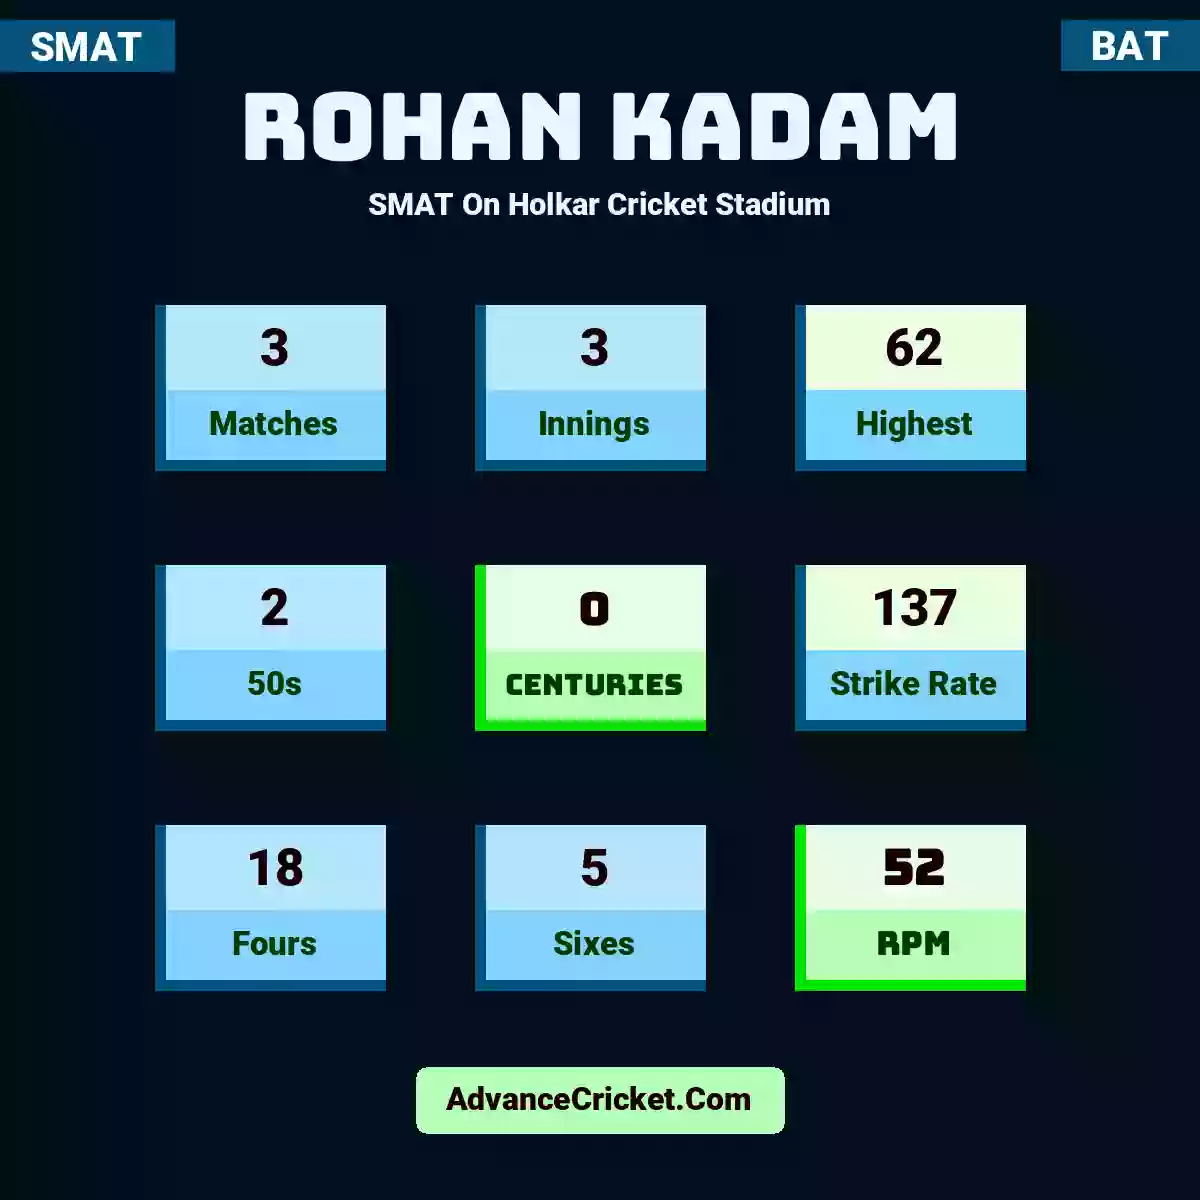 Rohan Kadam SMAT  On Holkar Cricket Stadium, Rohan Kadam played 3 matches, scored 62 runs as highest, 2 half-centuries, and 0 centuries, with a strike rate of 137. R.Kadam hit 18 fours and 5 sixes, with an RPM of 52.